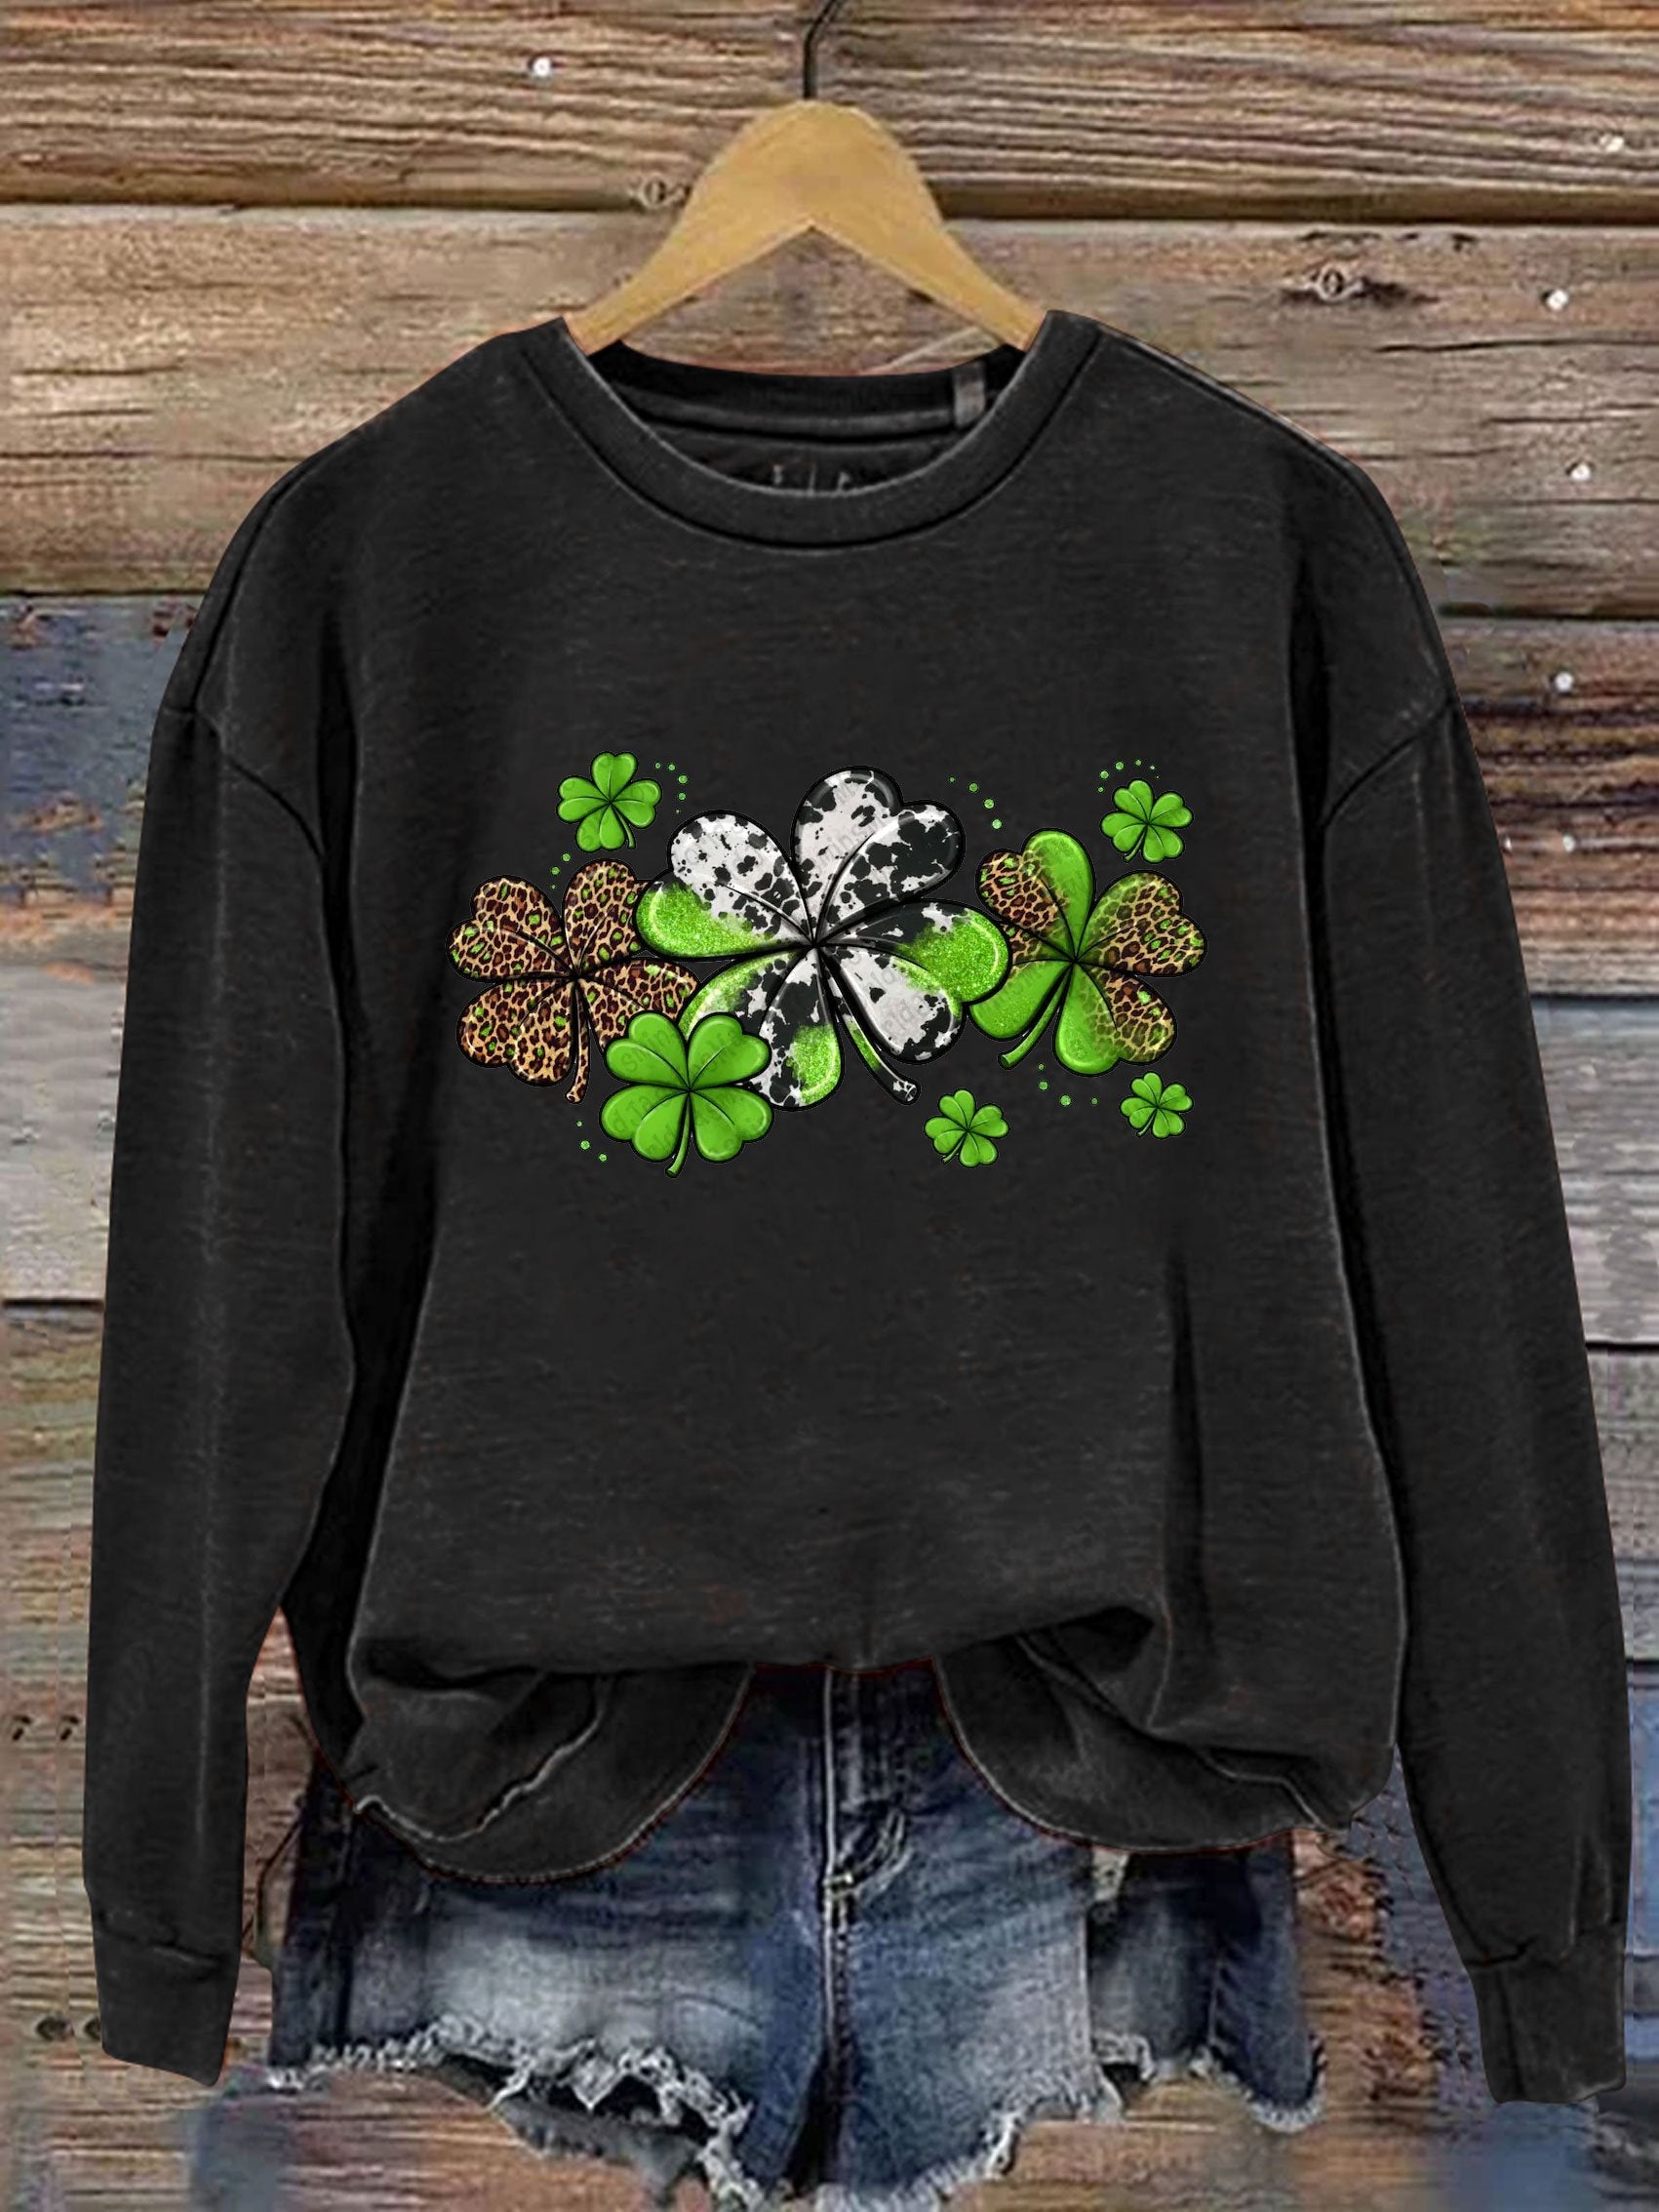 St. Patrick's Day Print Casual  Sweatshirt